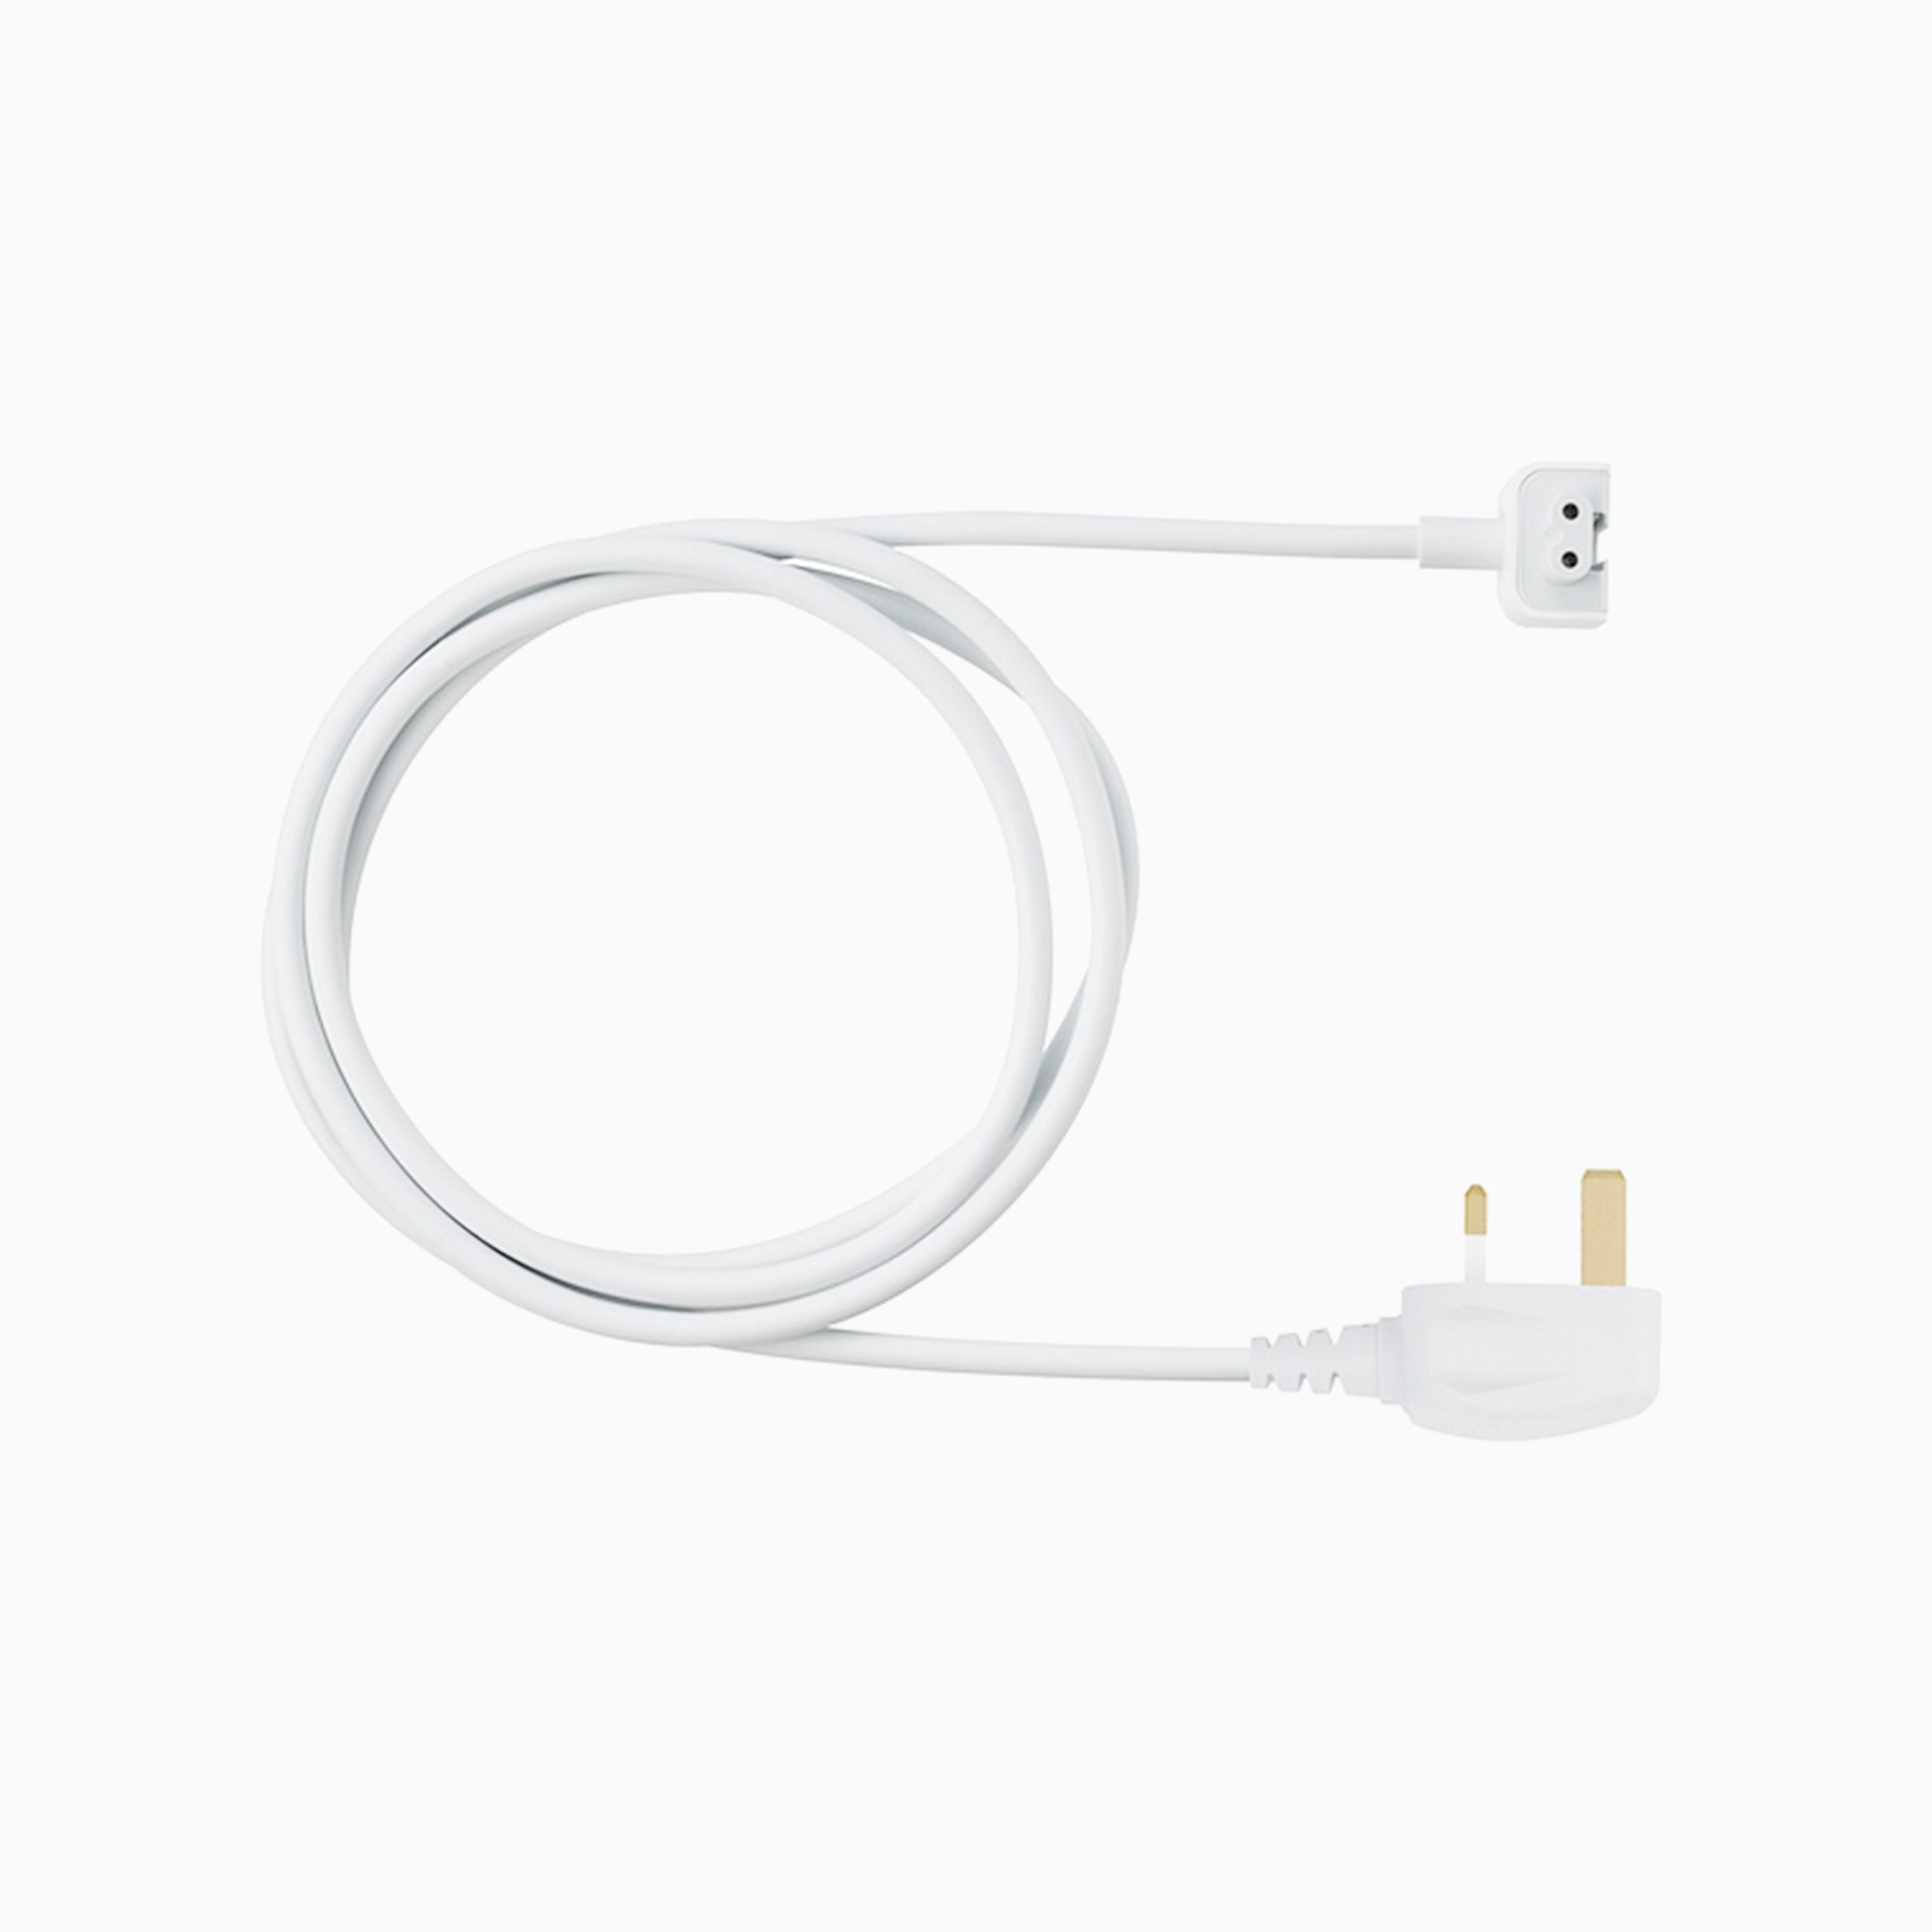 1 x Apple MacBook Pro Retina 15 Inch Quad-Core i7 2.50 GHz (2015)